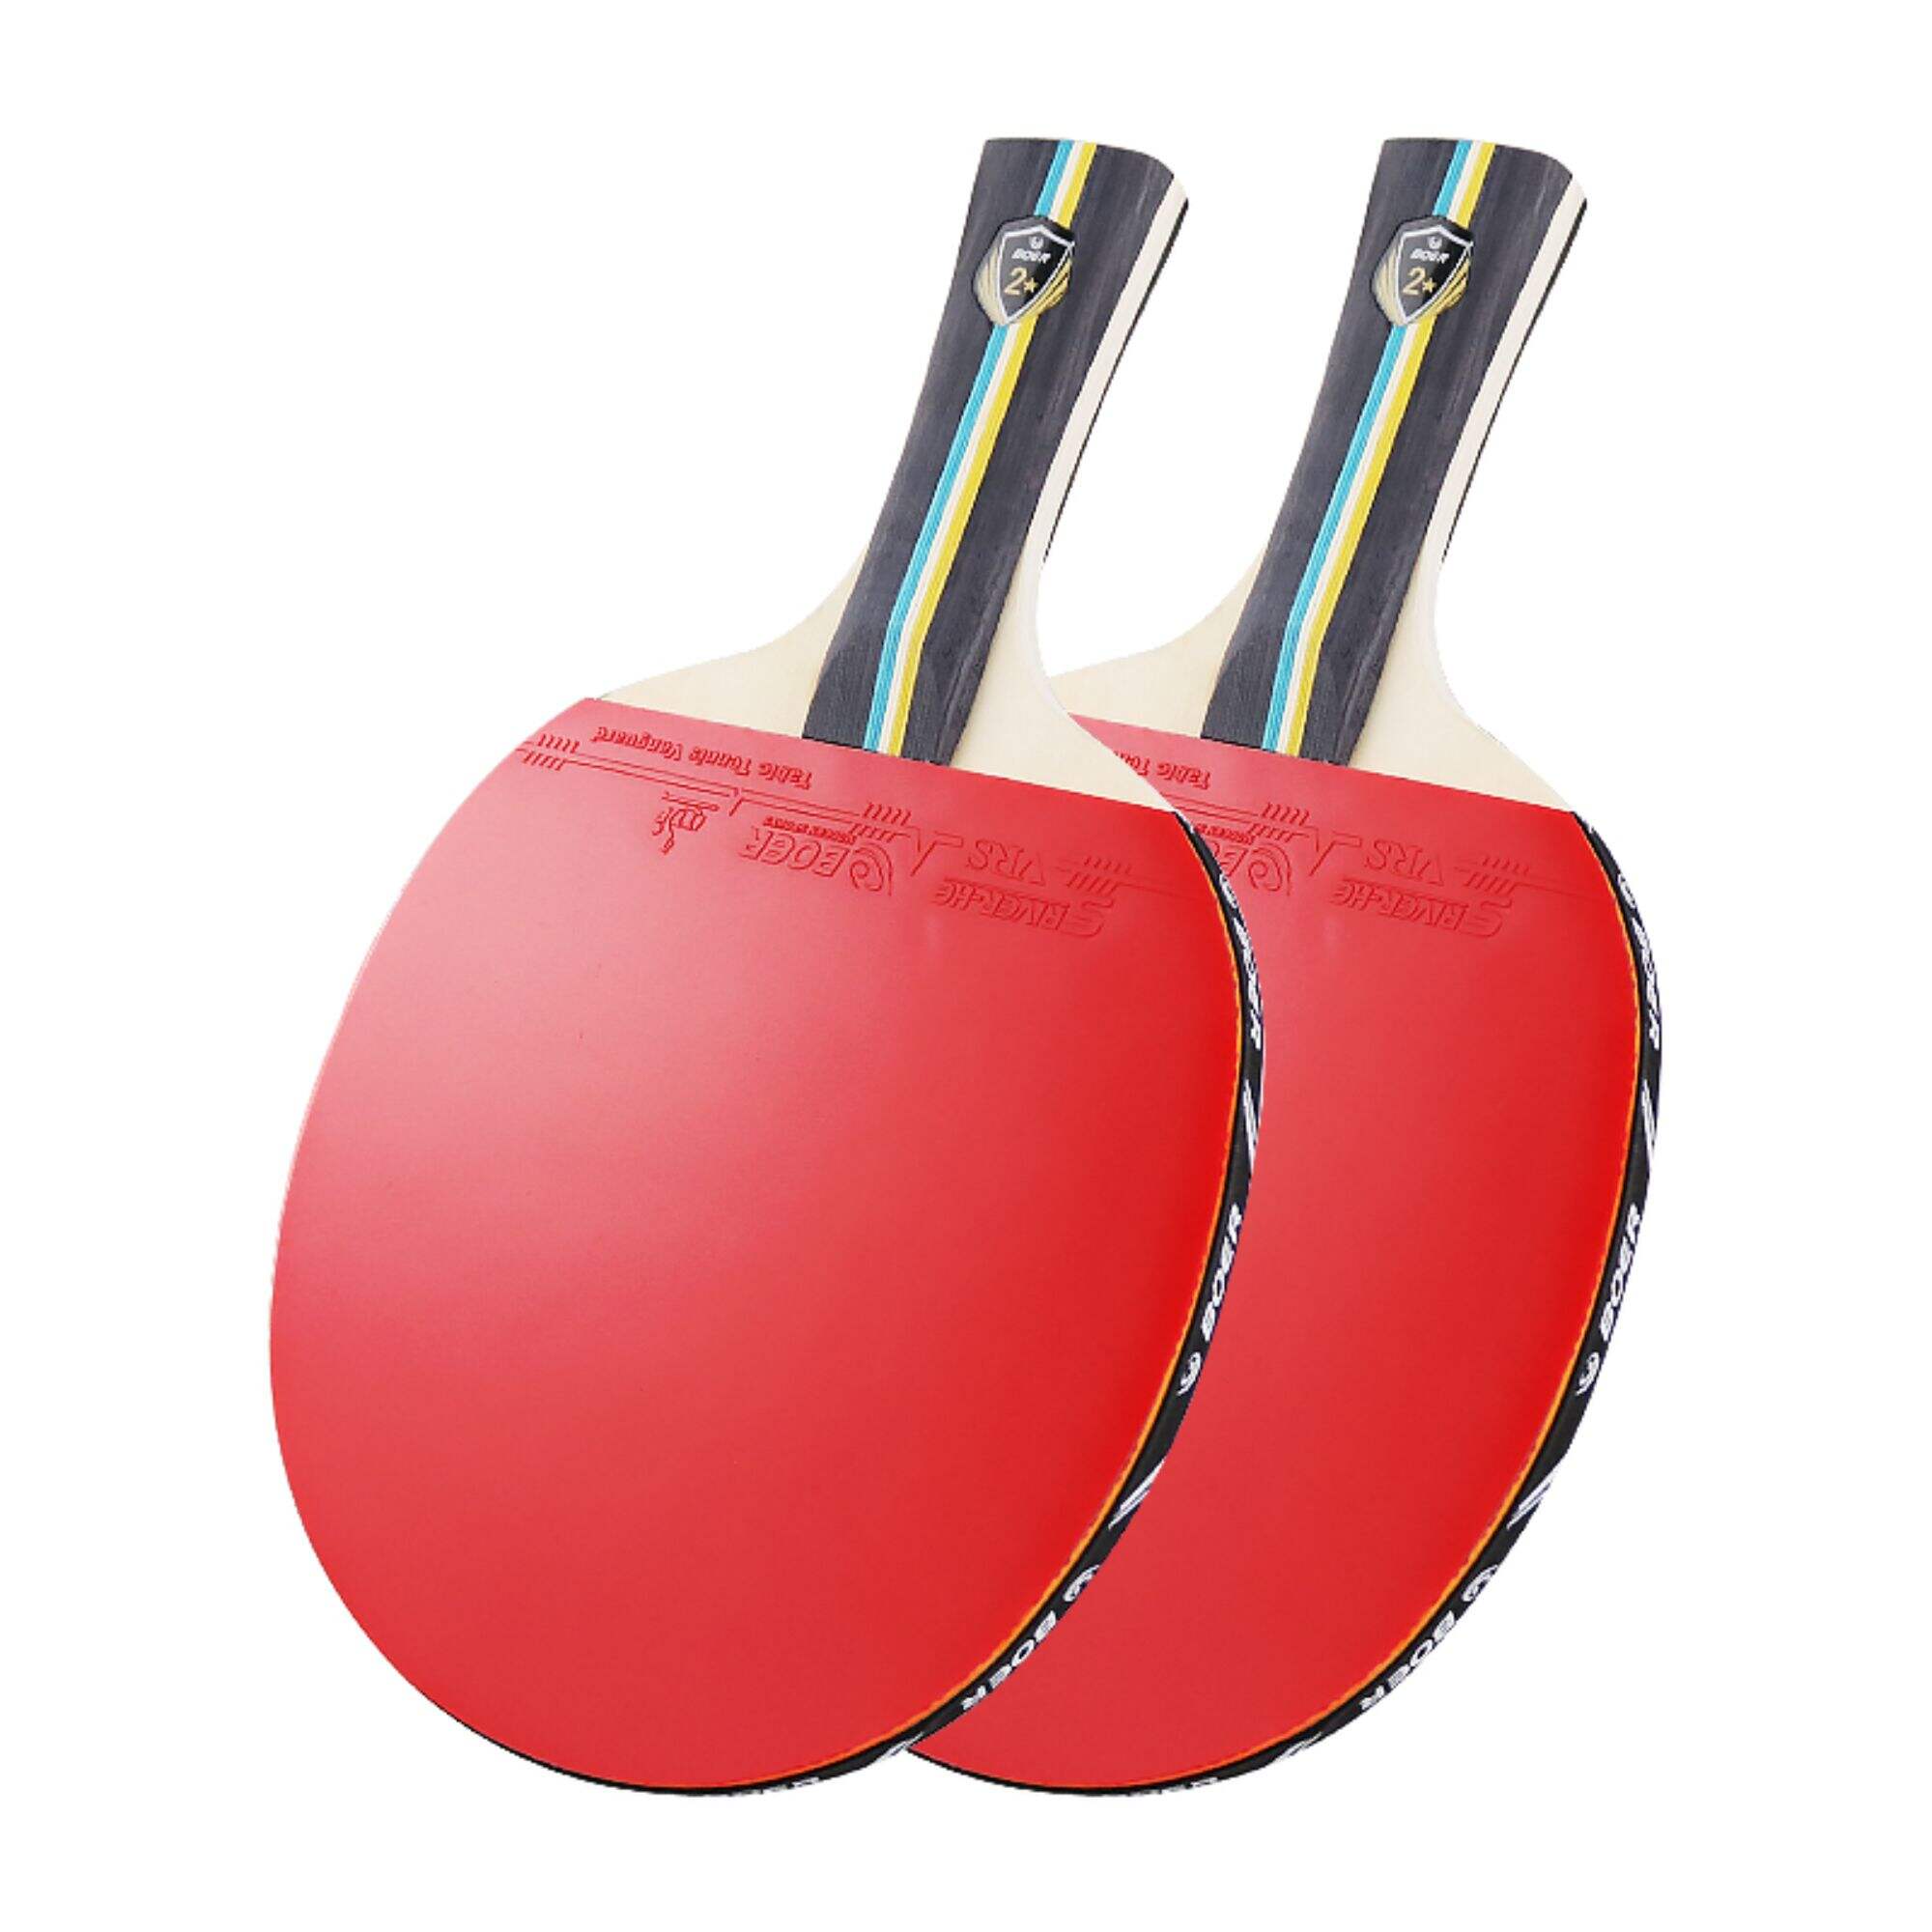 Boer 2star Professional Table Tennis Rakcet/Bat/Paddle